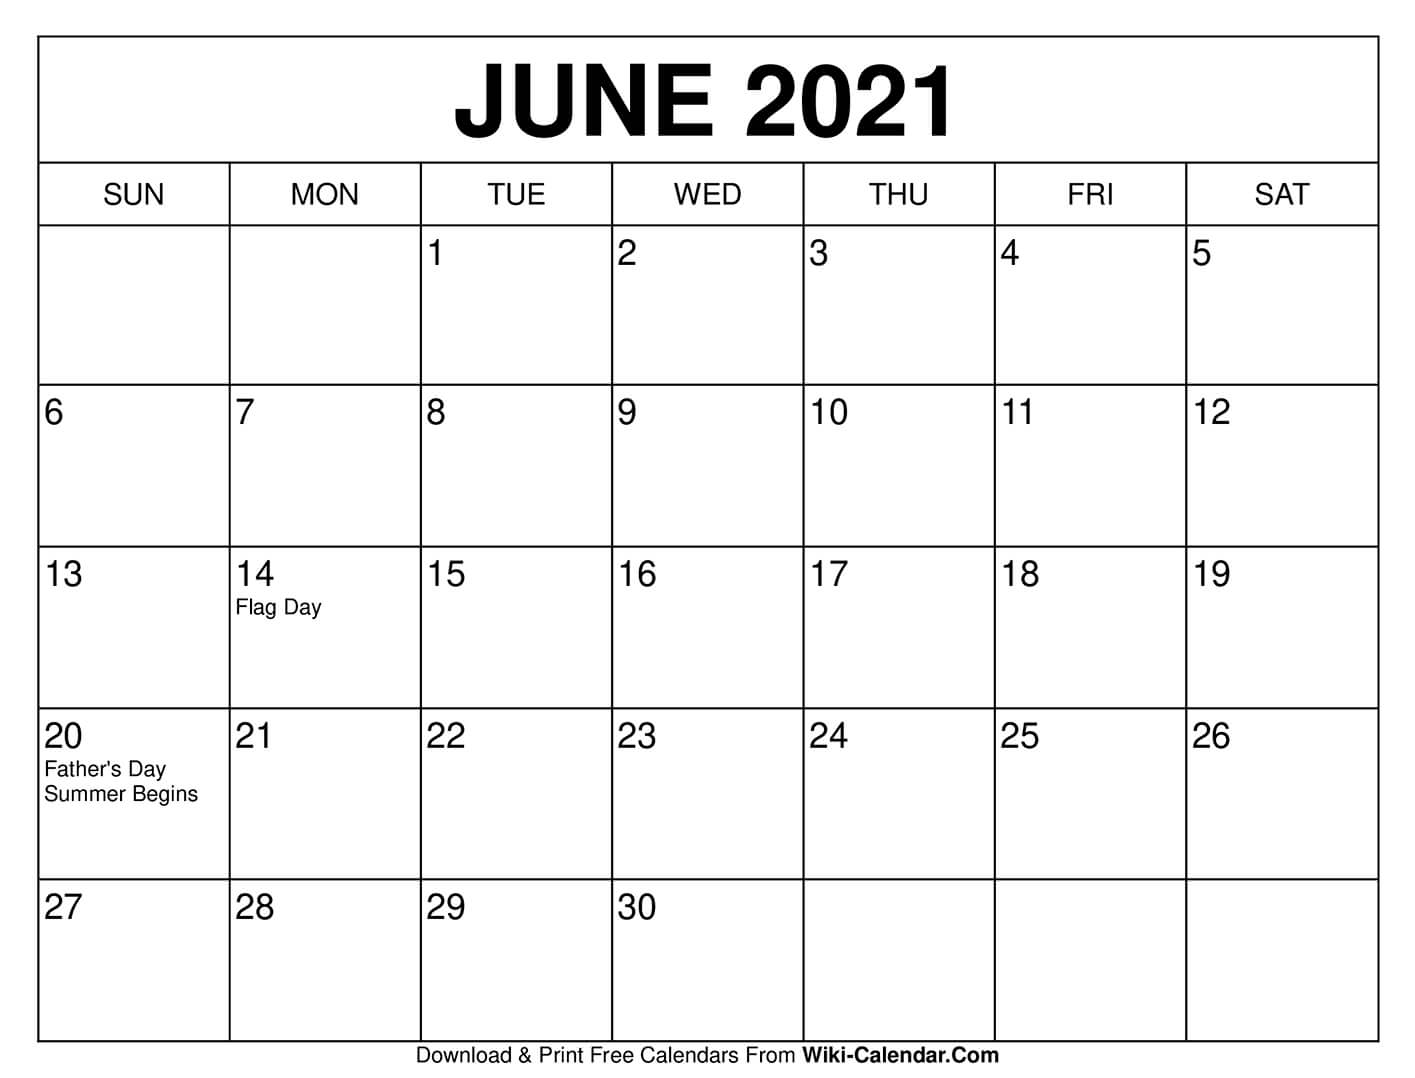 June 2021 Printable Calendar Wiki | 2021 Calendar